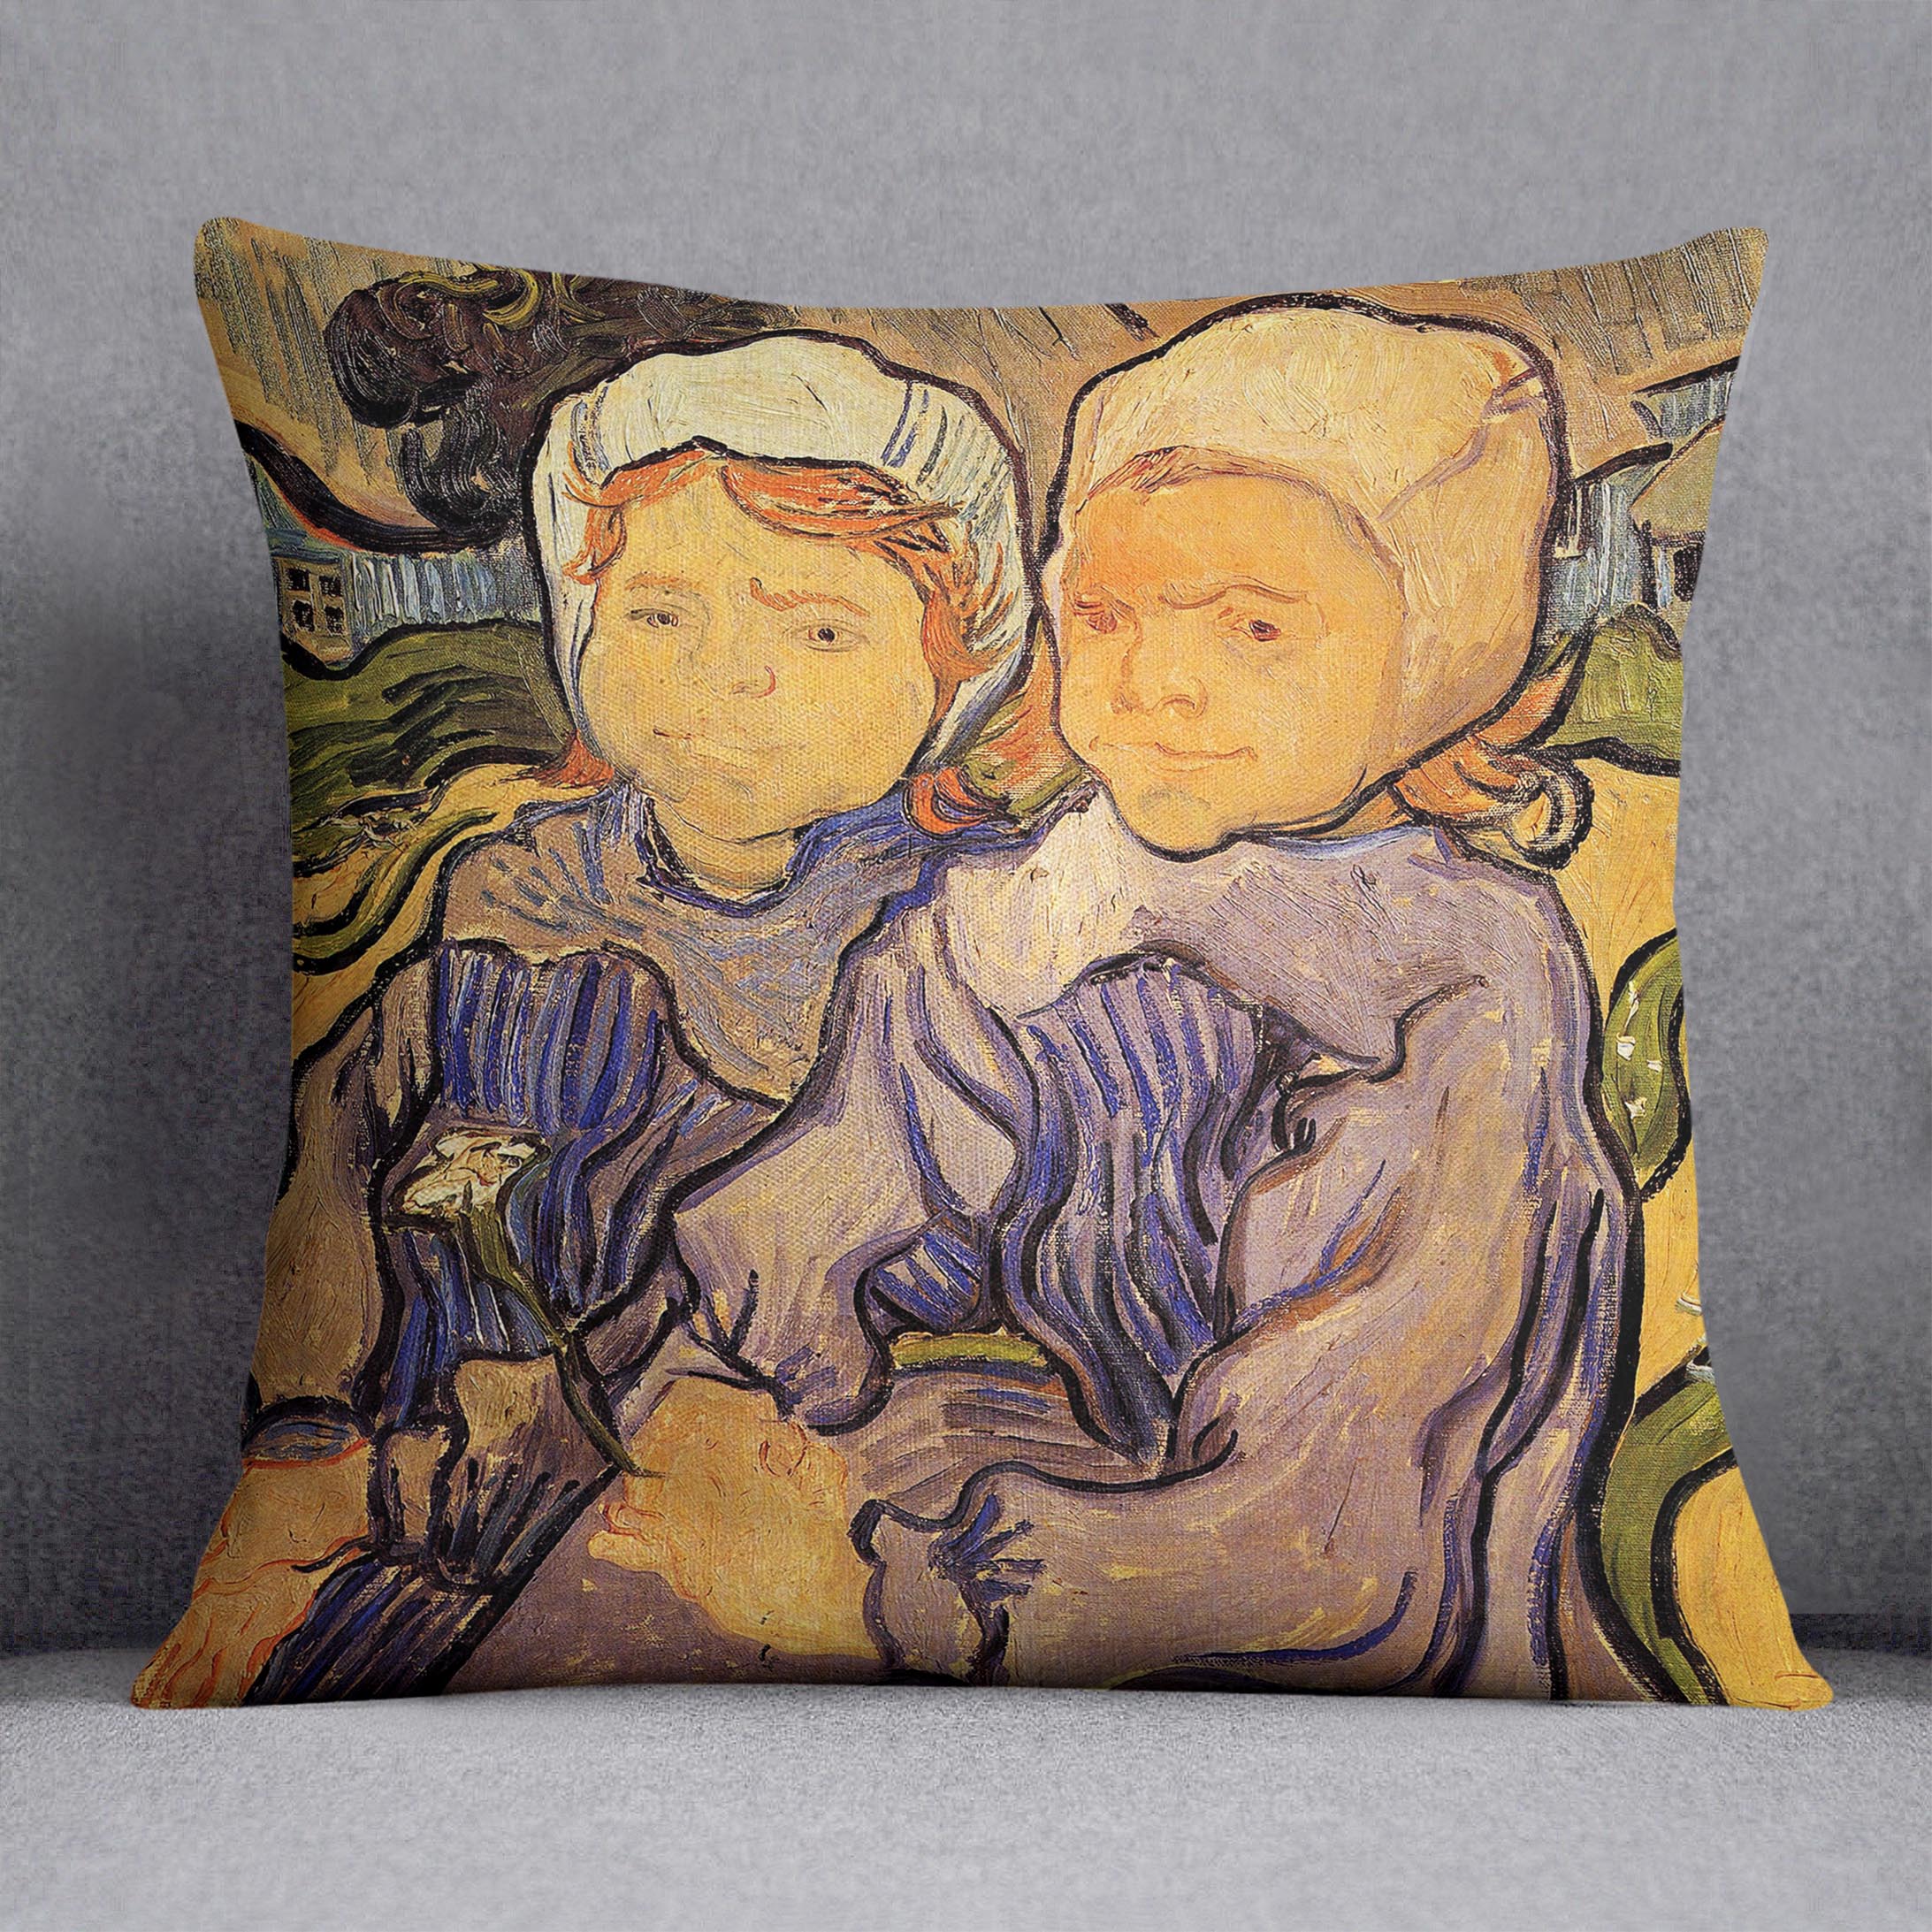 Two Children by Van Gogh Cushion